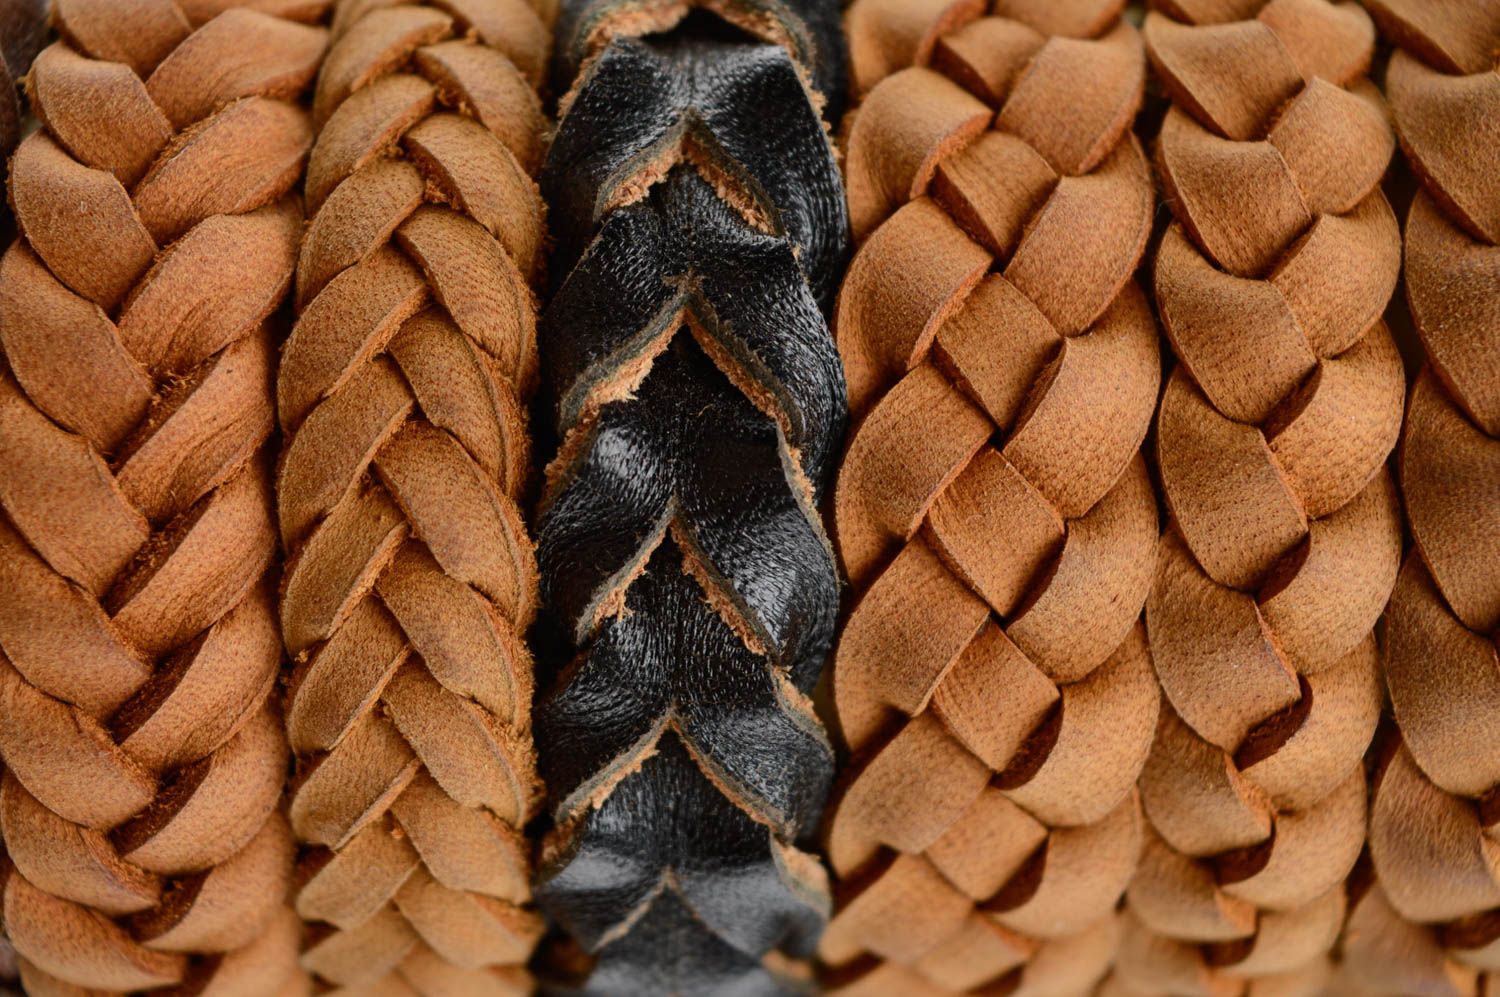 Black woven genuine leather bracelet photo 5